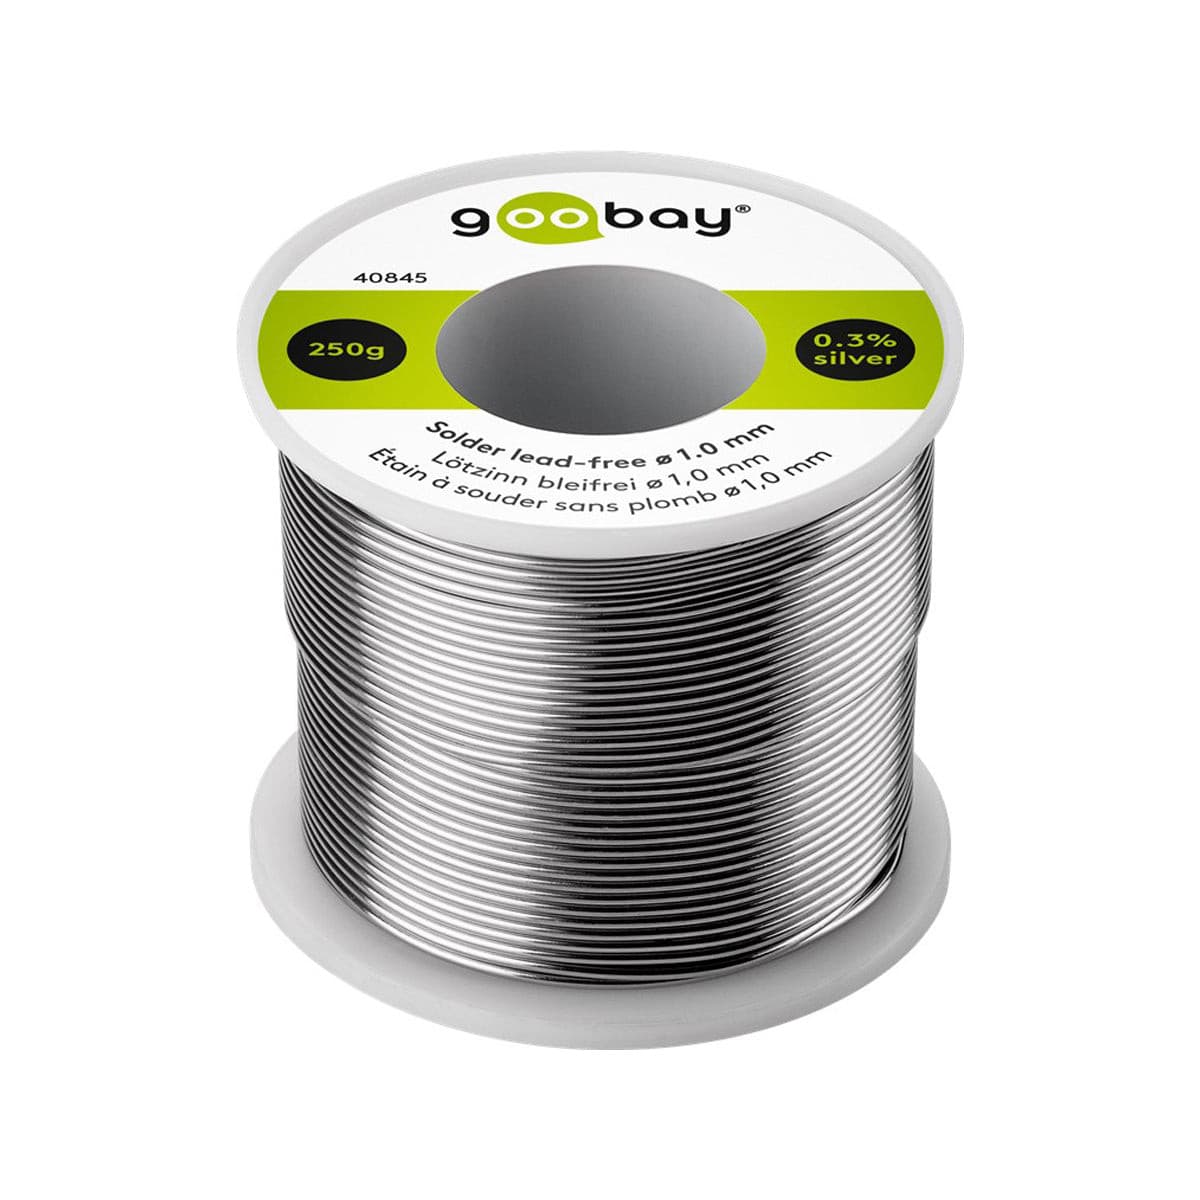 Goobay Professional Solder Lead-Free - 1.0 mm.